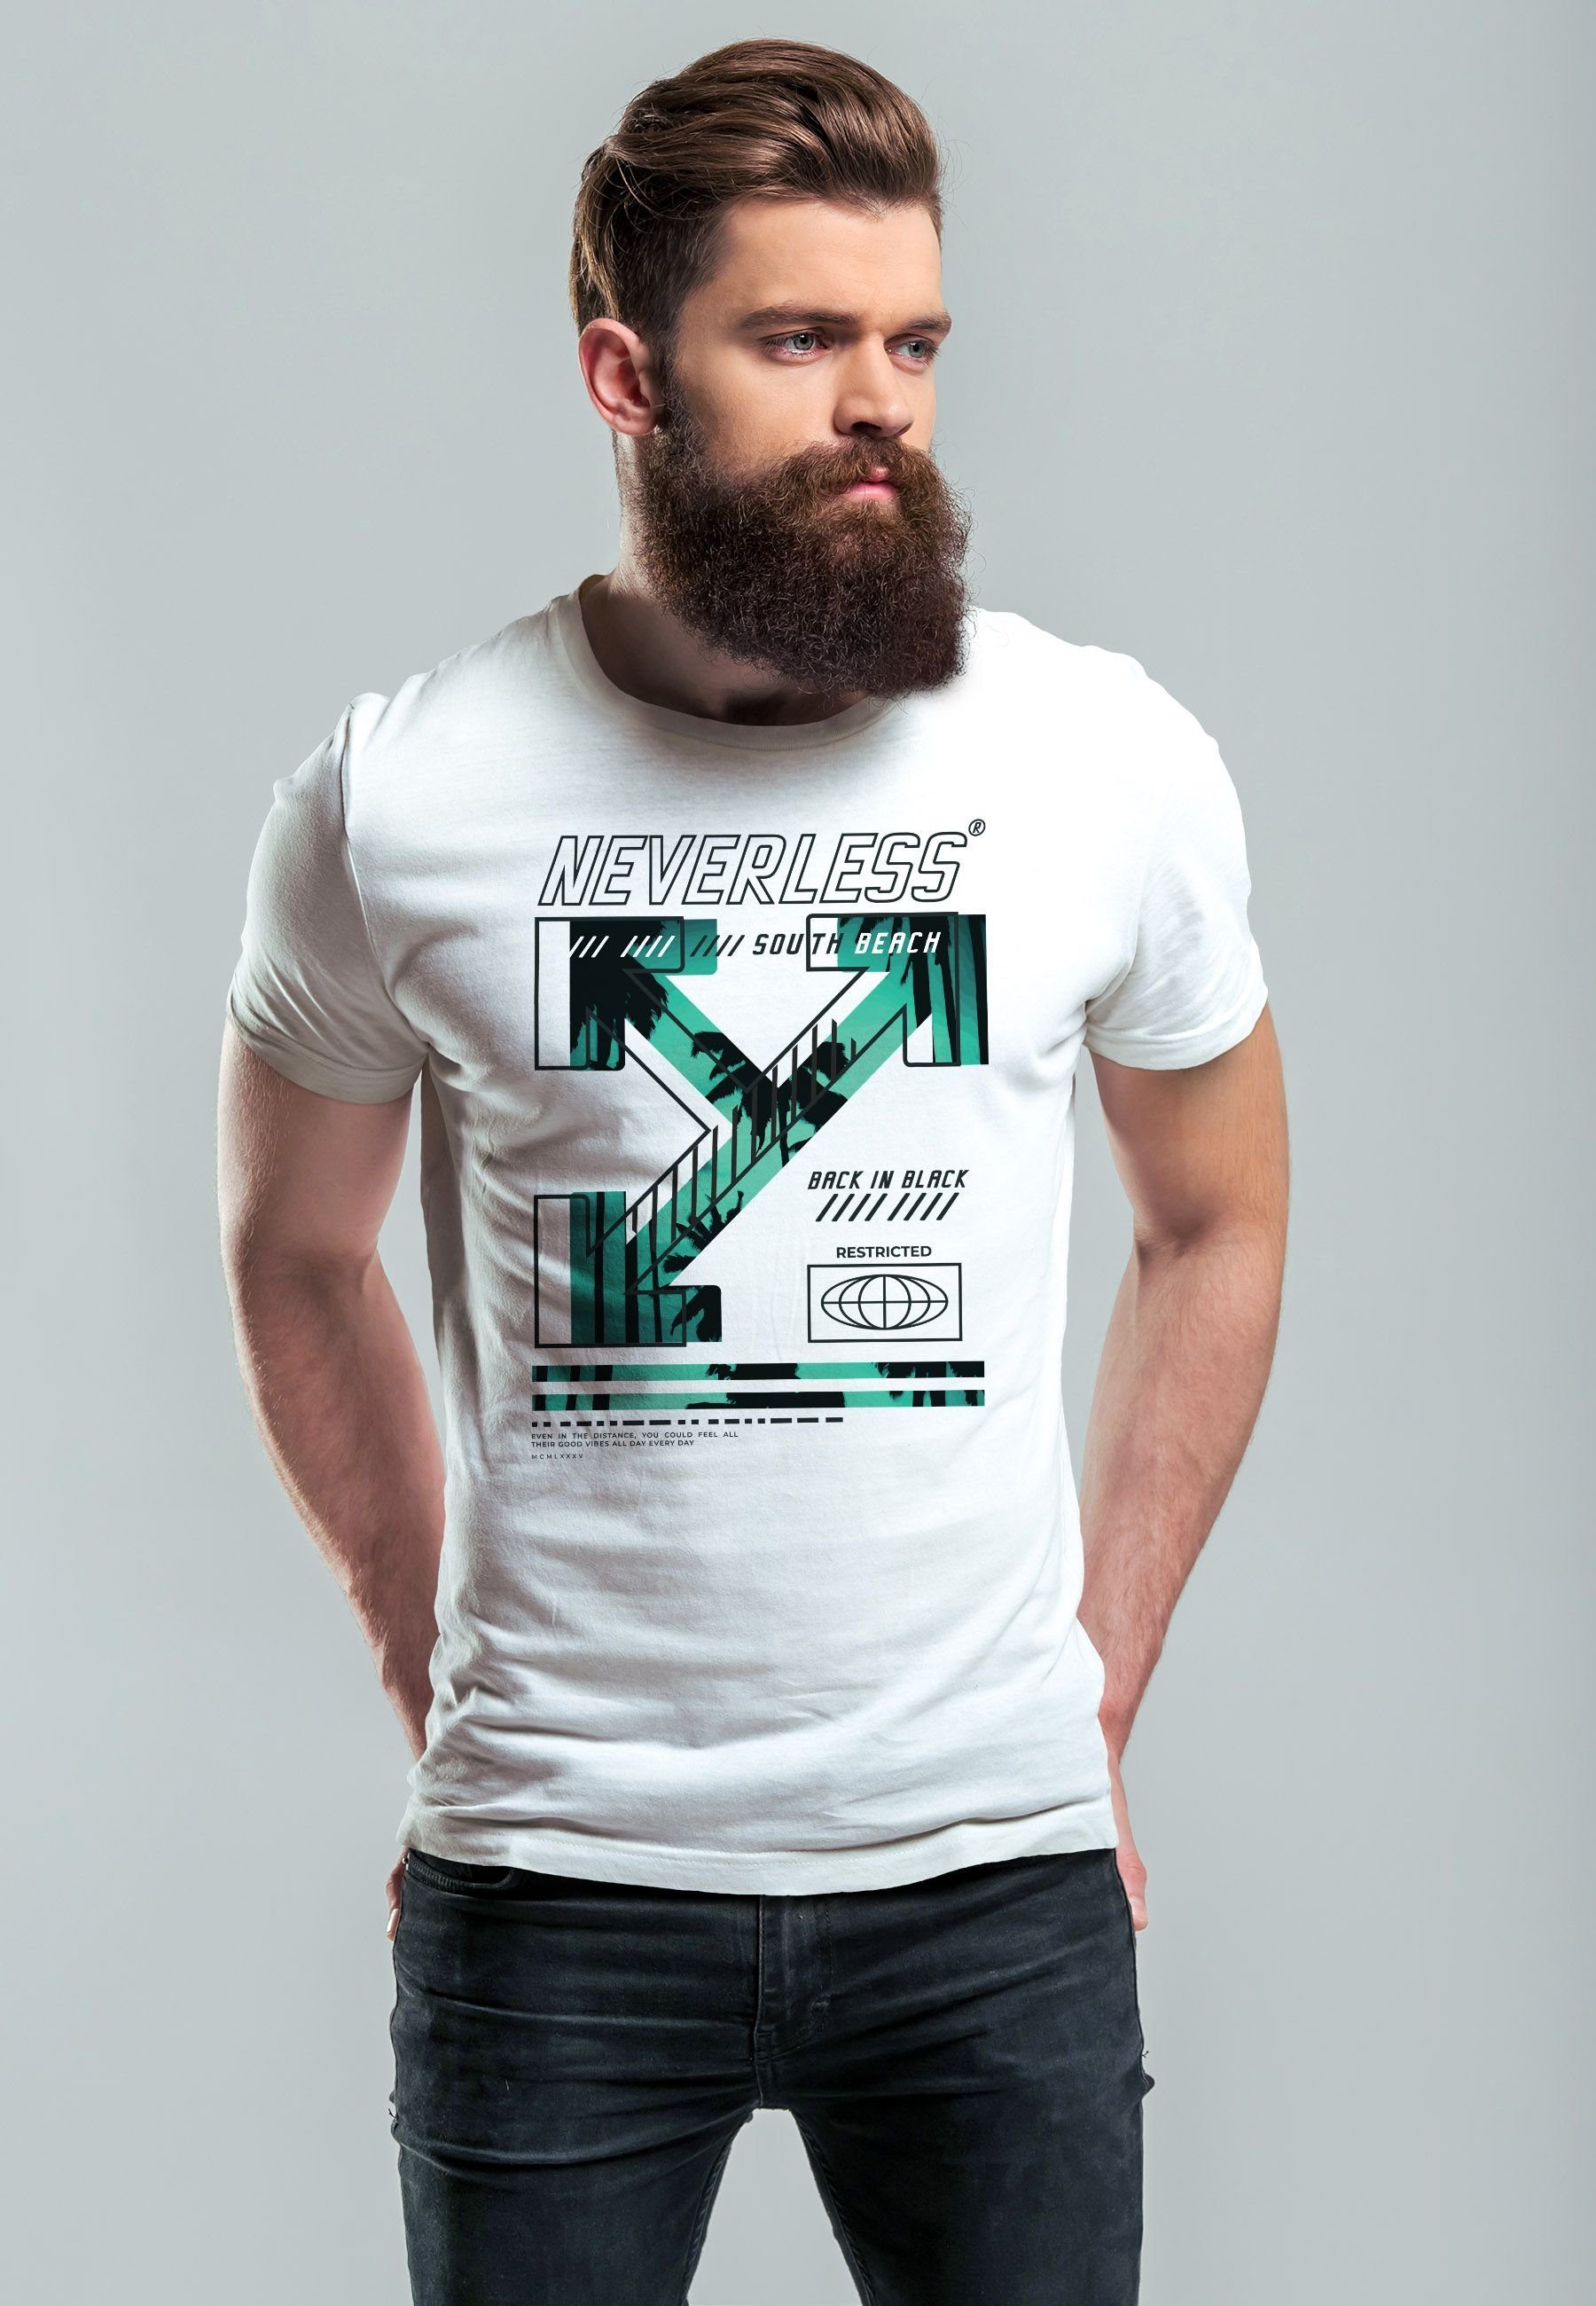 Neverless Print-Shirt weiß Beach South T-Shirt Techwear Fashion Text Street Aufdruck mit Print Herren Print